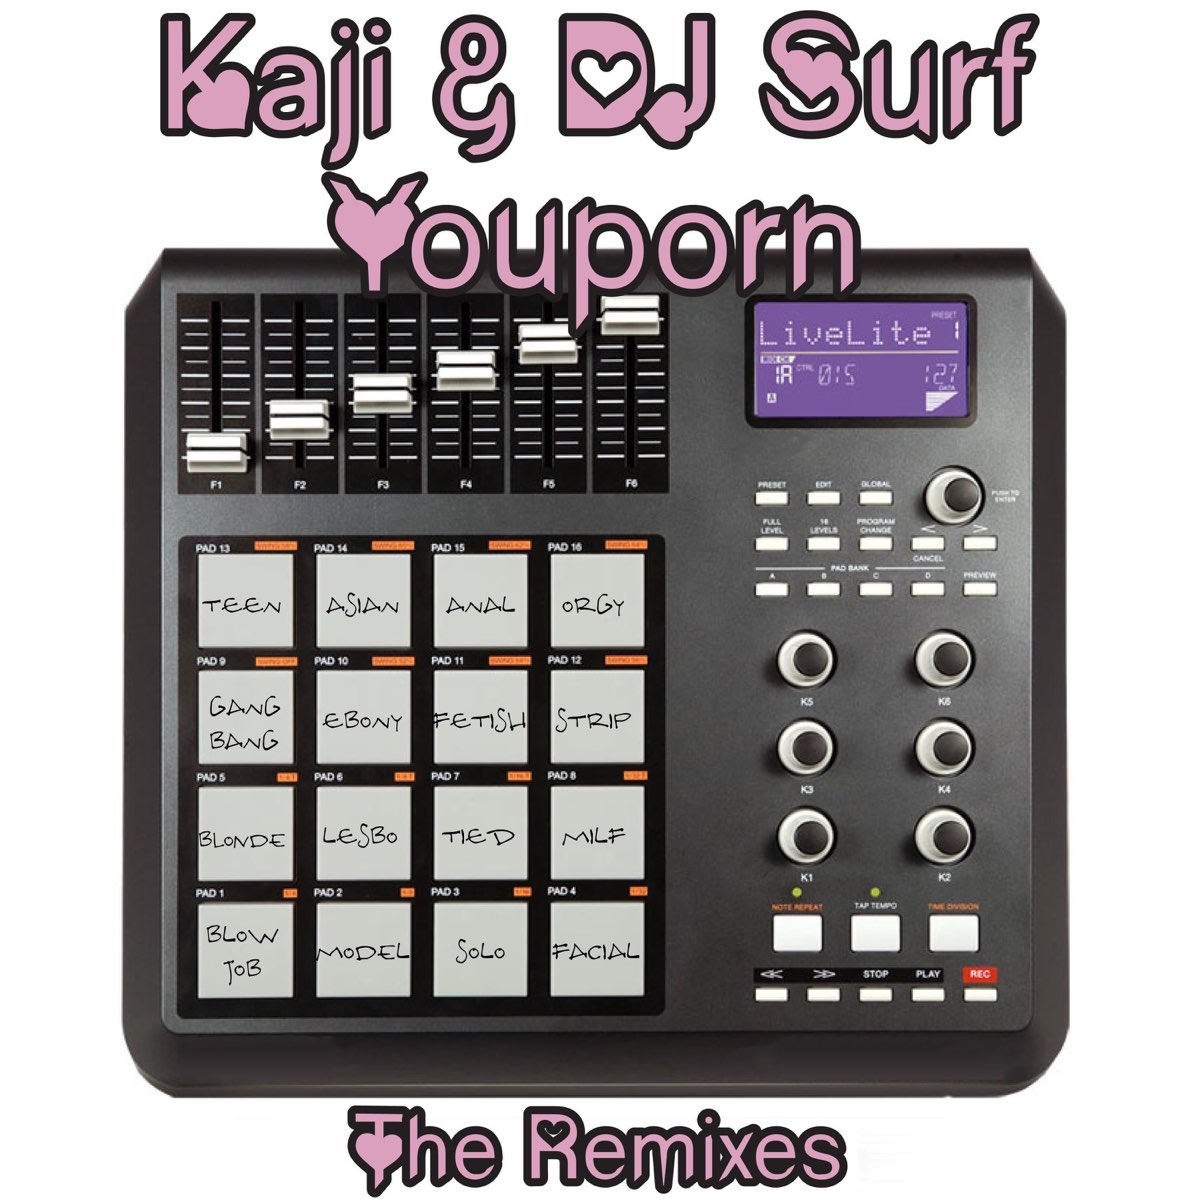 Youporn The Remixes by Kaji & Dj Surf on Apple Music